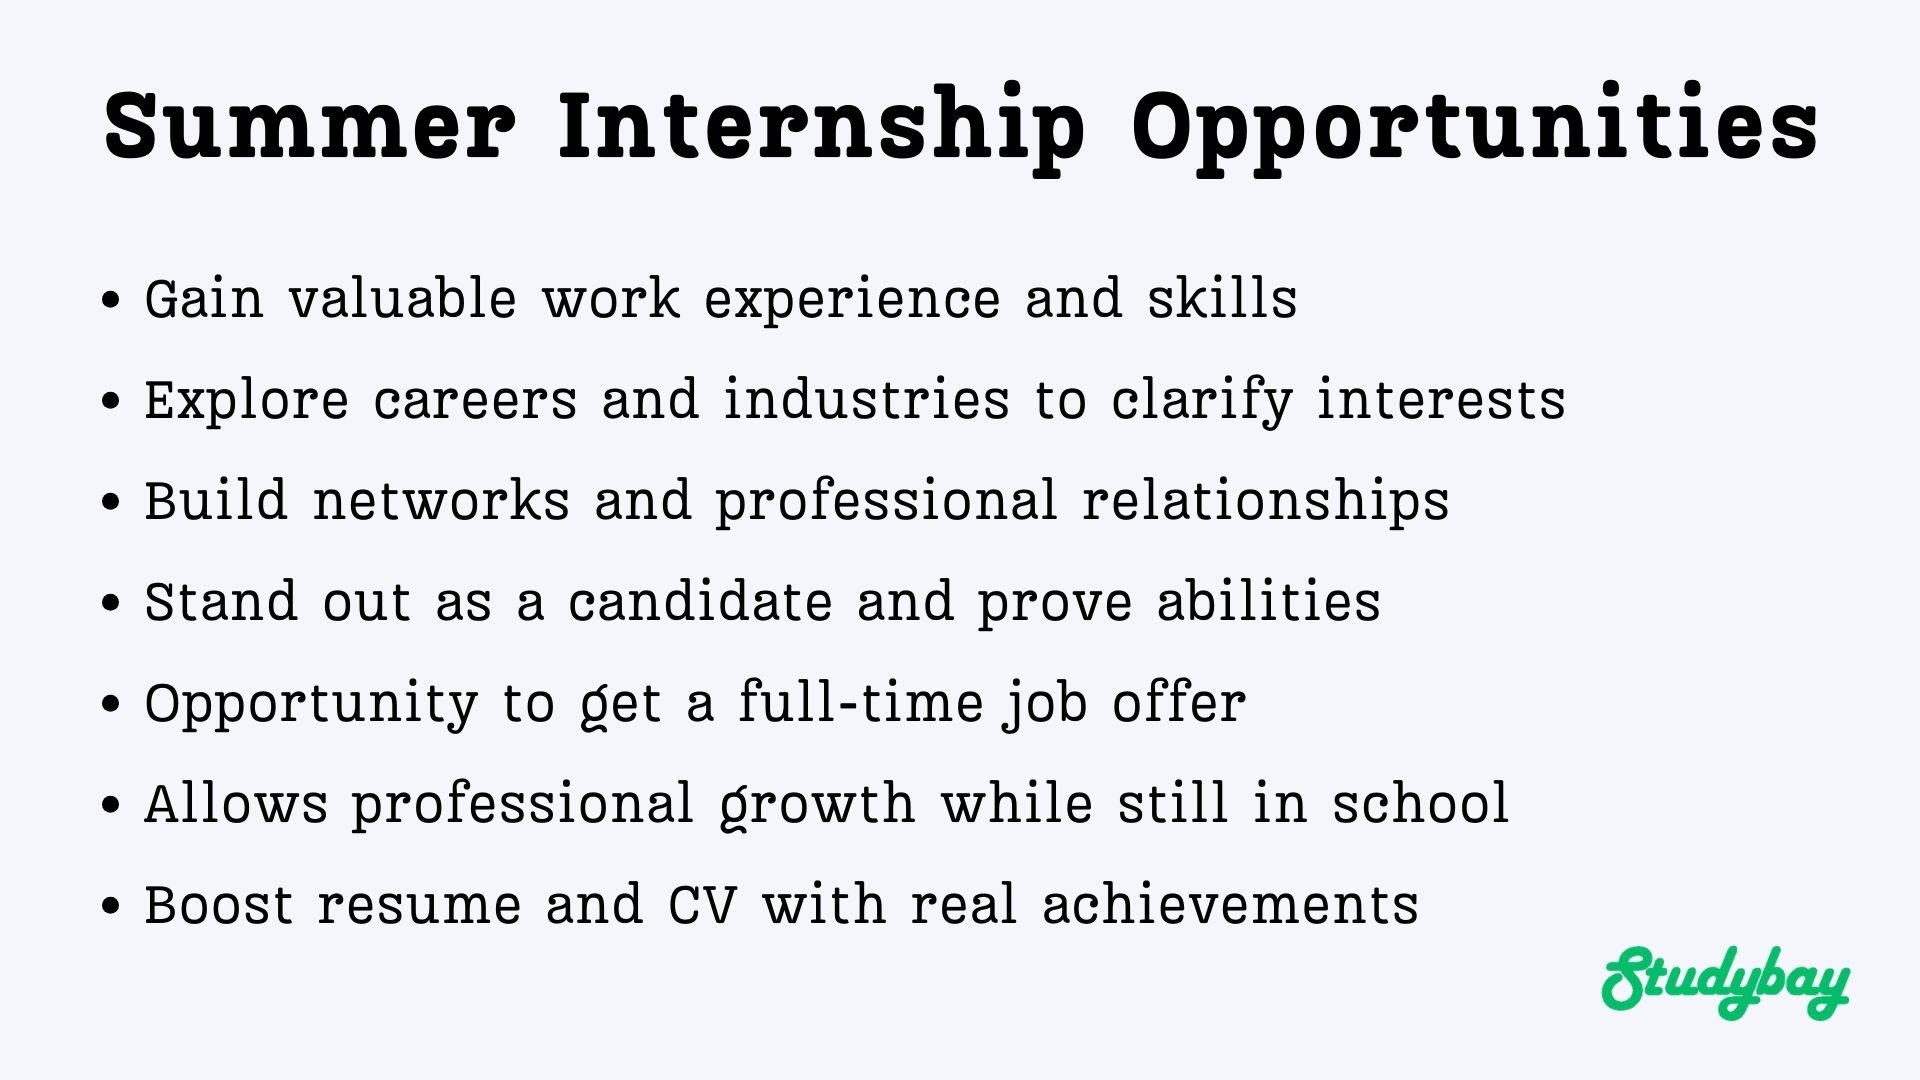 Summer internship opportunities